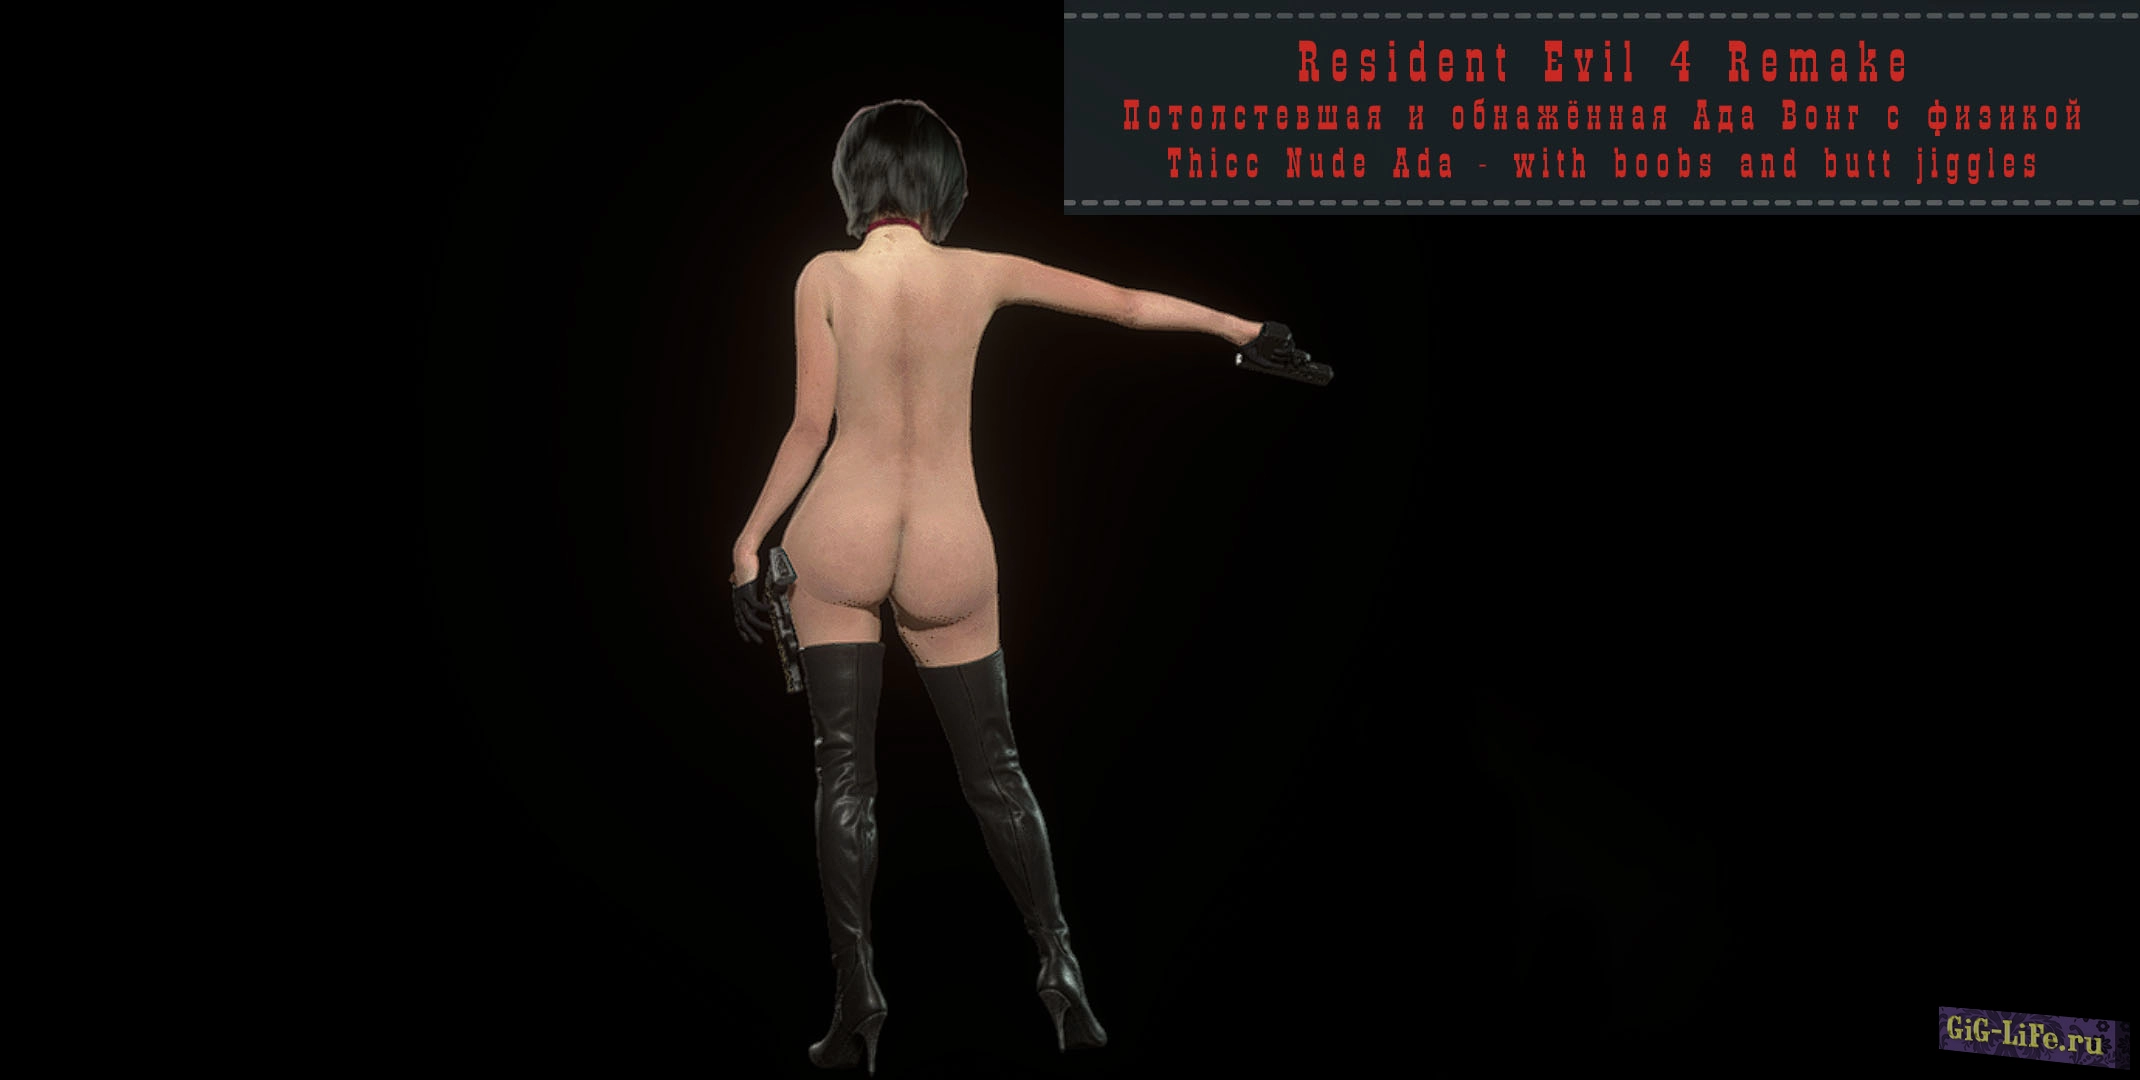 Resident Evil 4 Remake — Потолстевшая и обнажённая Ада Вонг с физикой | Thicc Nude Ada - with boobs and butt jiggles